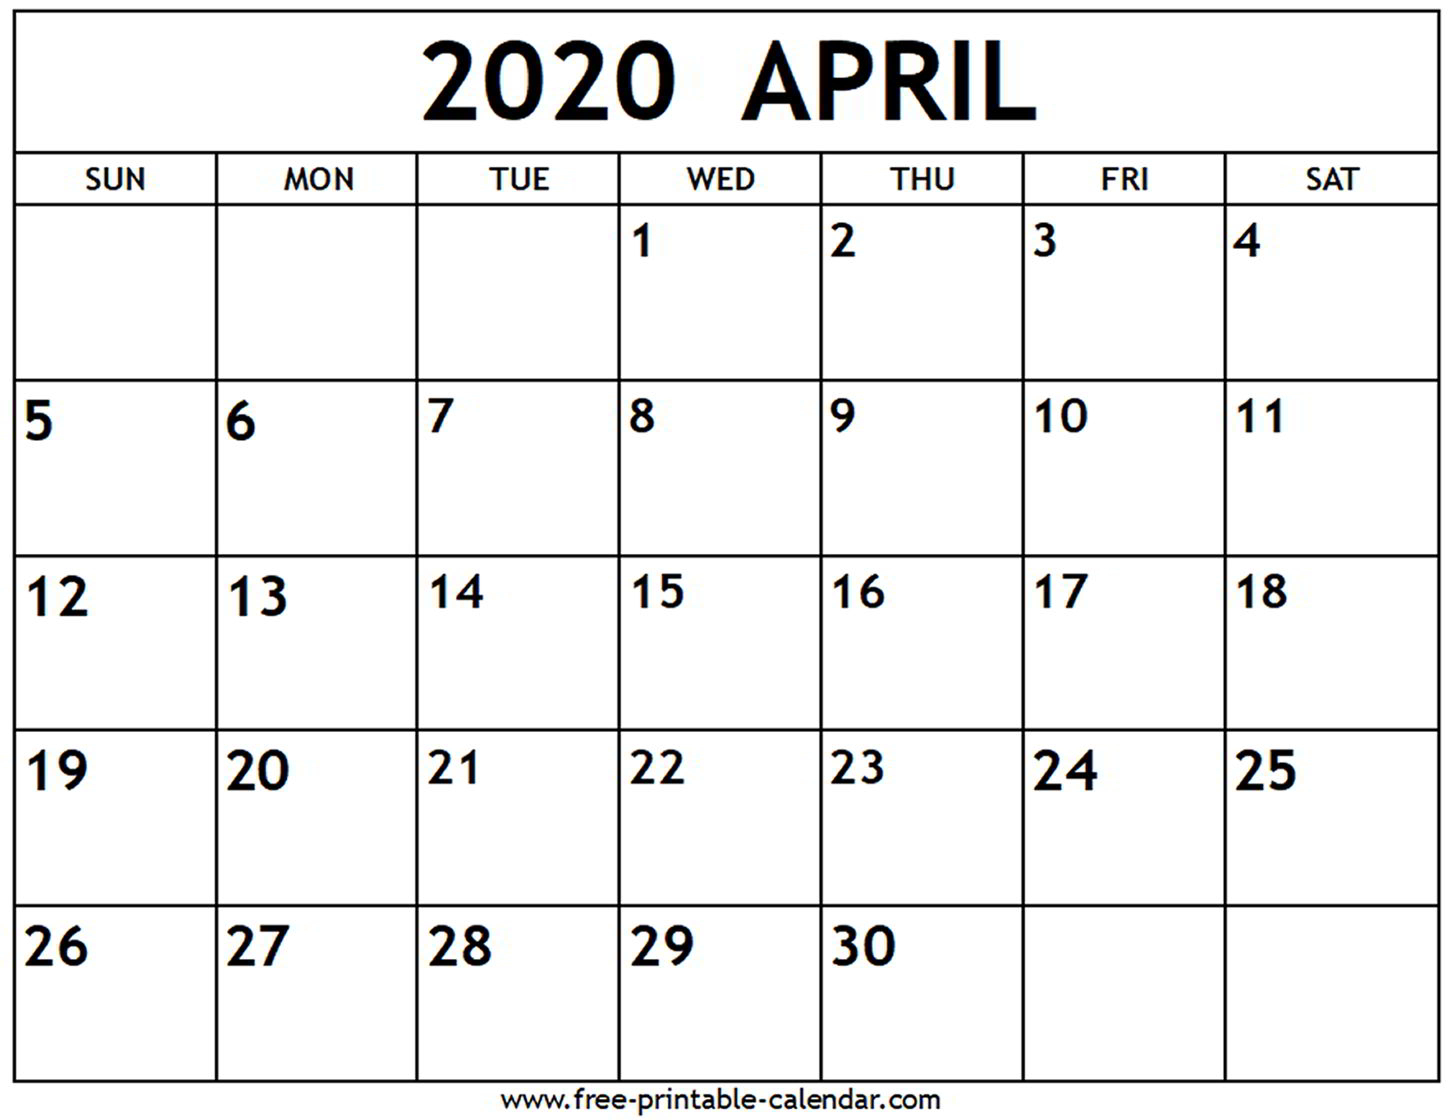 April 2020 Calendar - Free-Printable-Calendar